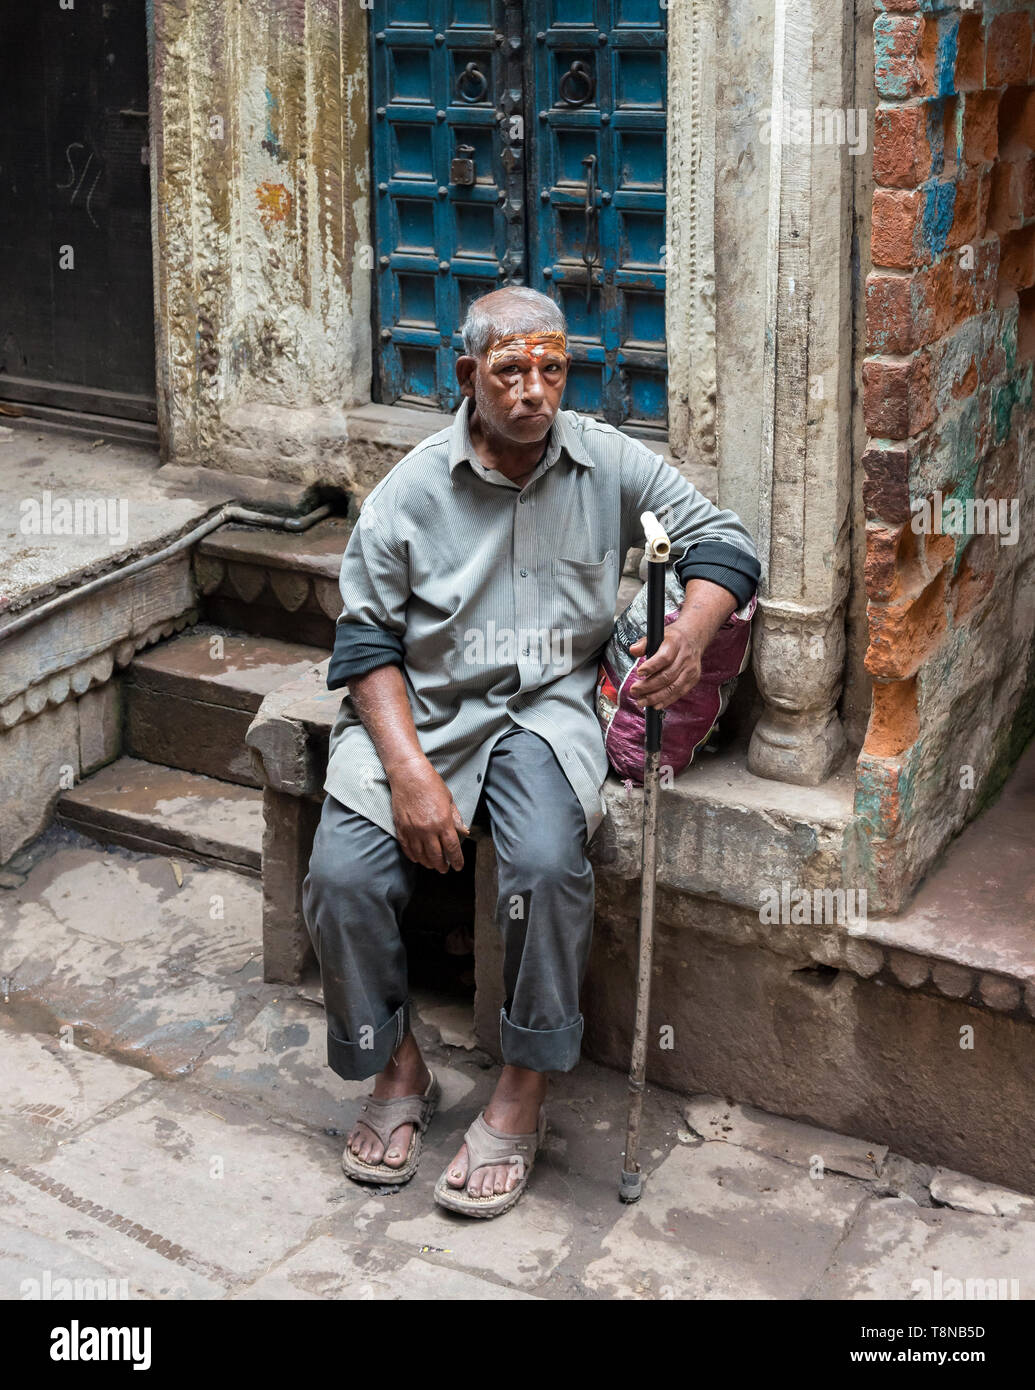 Portrait of an Indian man, Old City of Varanasi, India Stock Photo